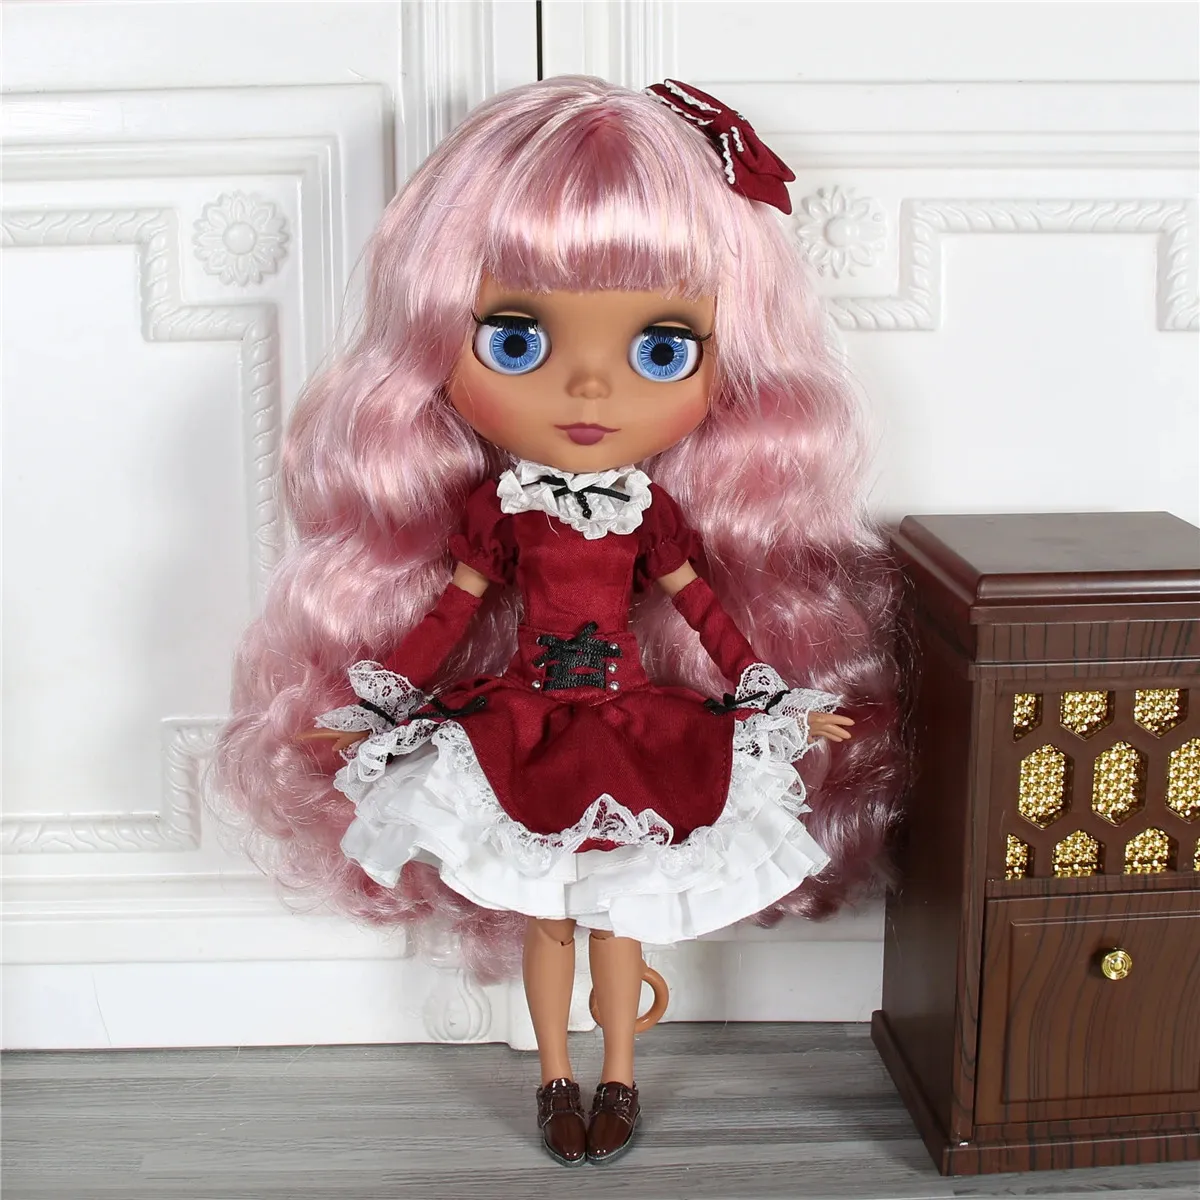 Poppen ICY DBS Blyth Doll 1 6 bjd joint body donkere huid mat gezicht paars mix roze haar speelgoed 30cm meisjes cadeau 231124